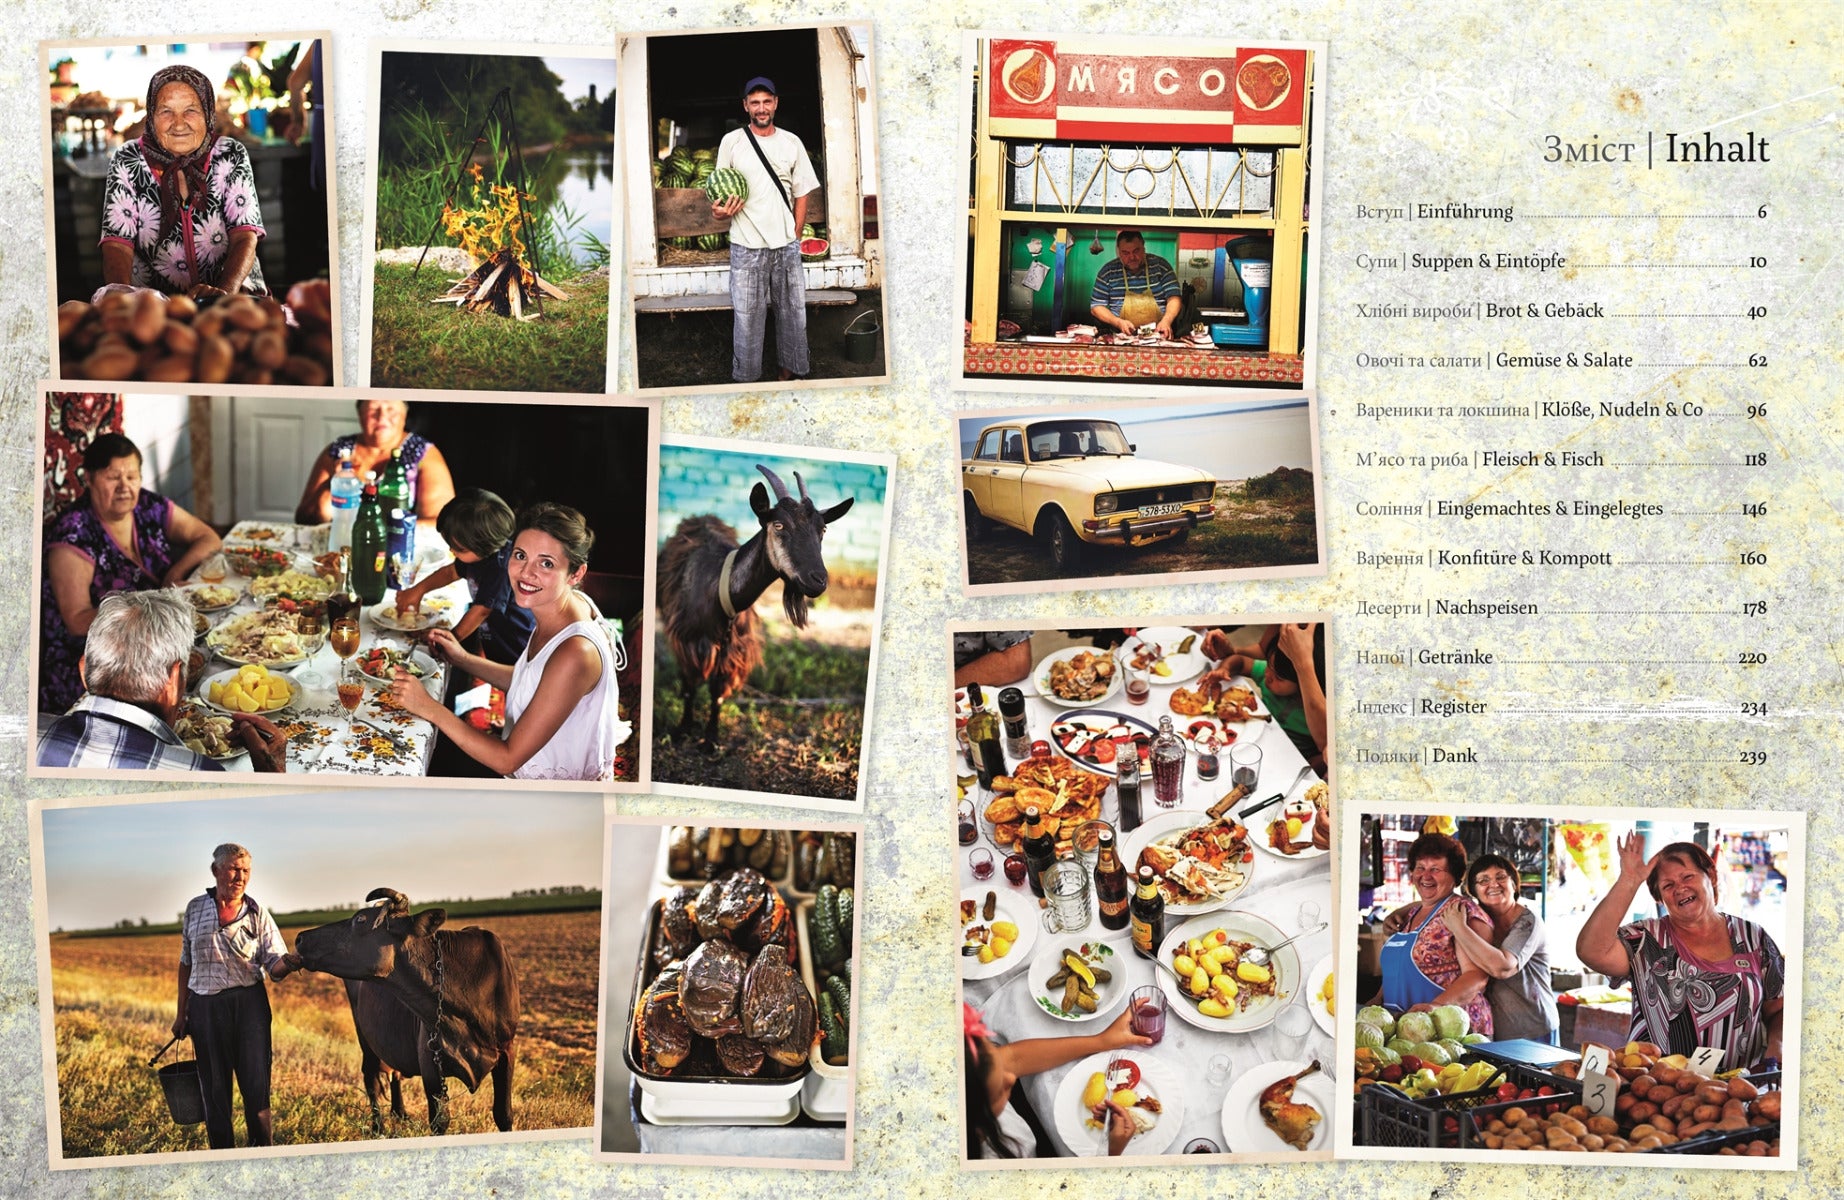 Mamusia - Familienrezepte aus der Ukraine (Kochbuch)